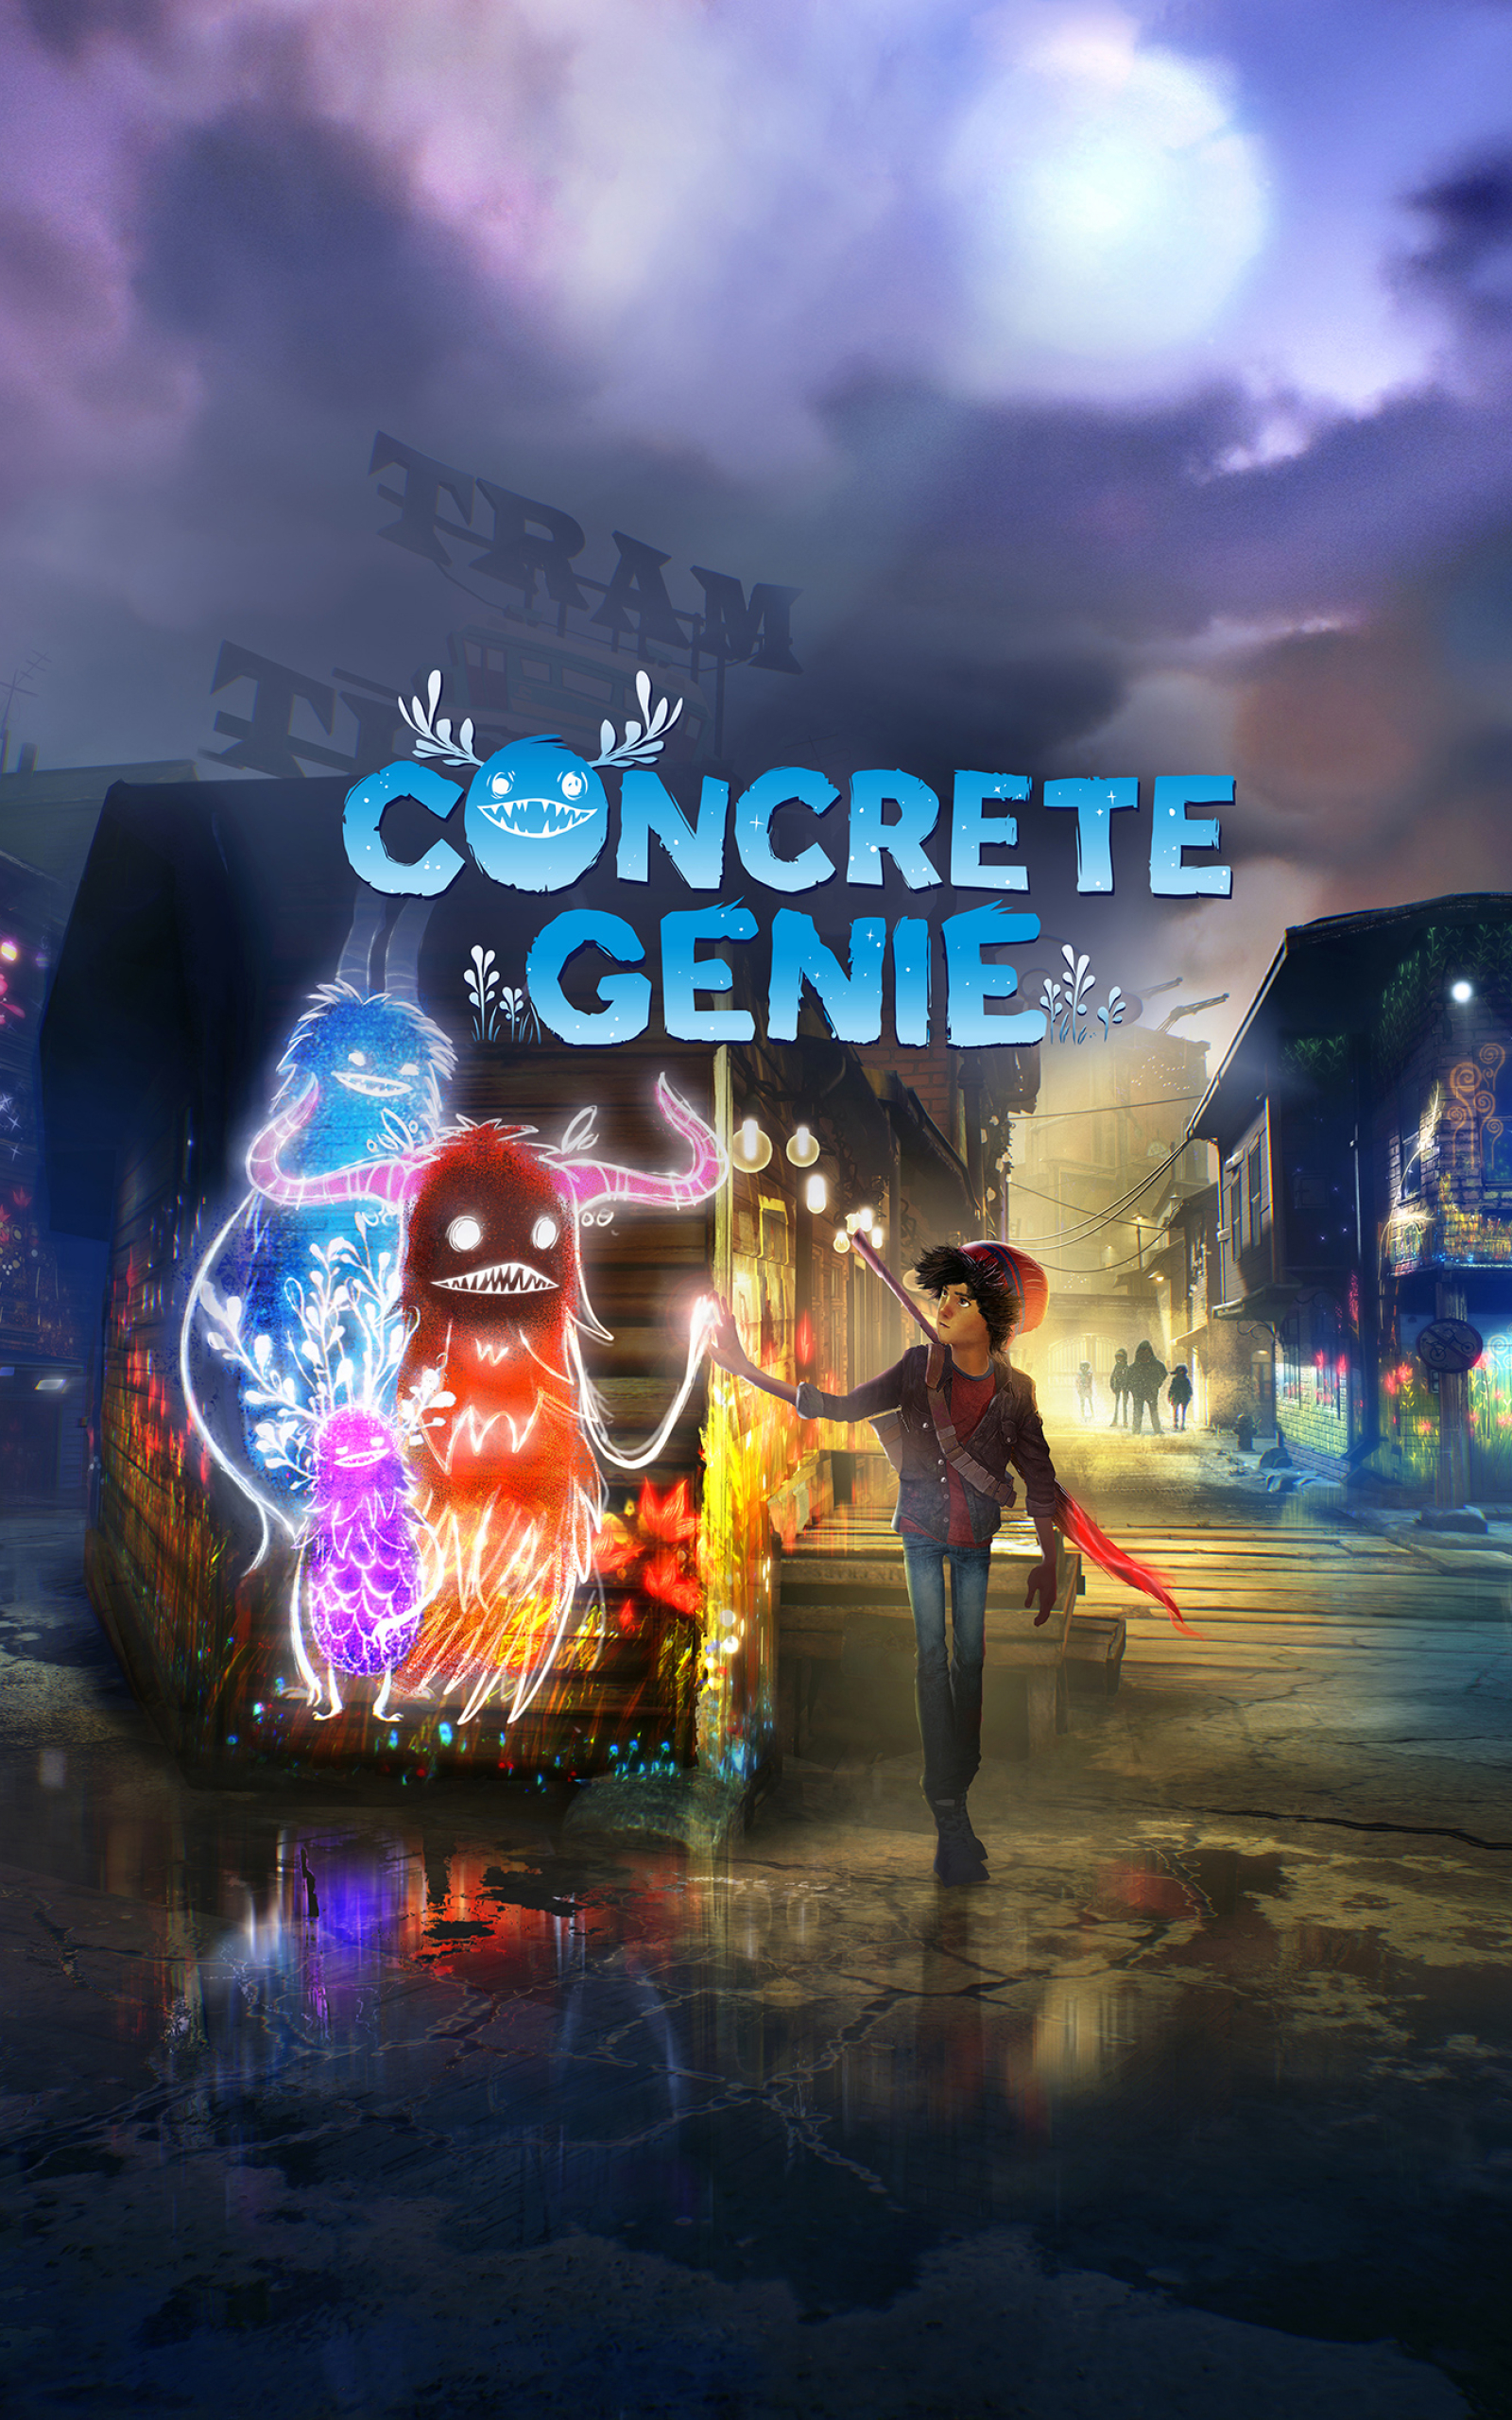 Concrete genie. Concrete Genie (городские духи). Concrete Genie Постер. Concrete Genie Эш. Concrete Genie обложка.